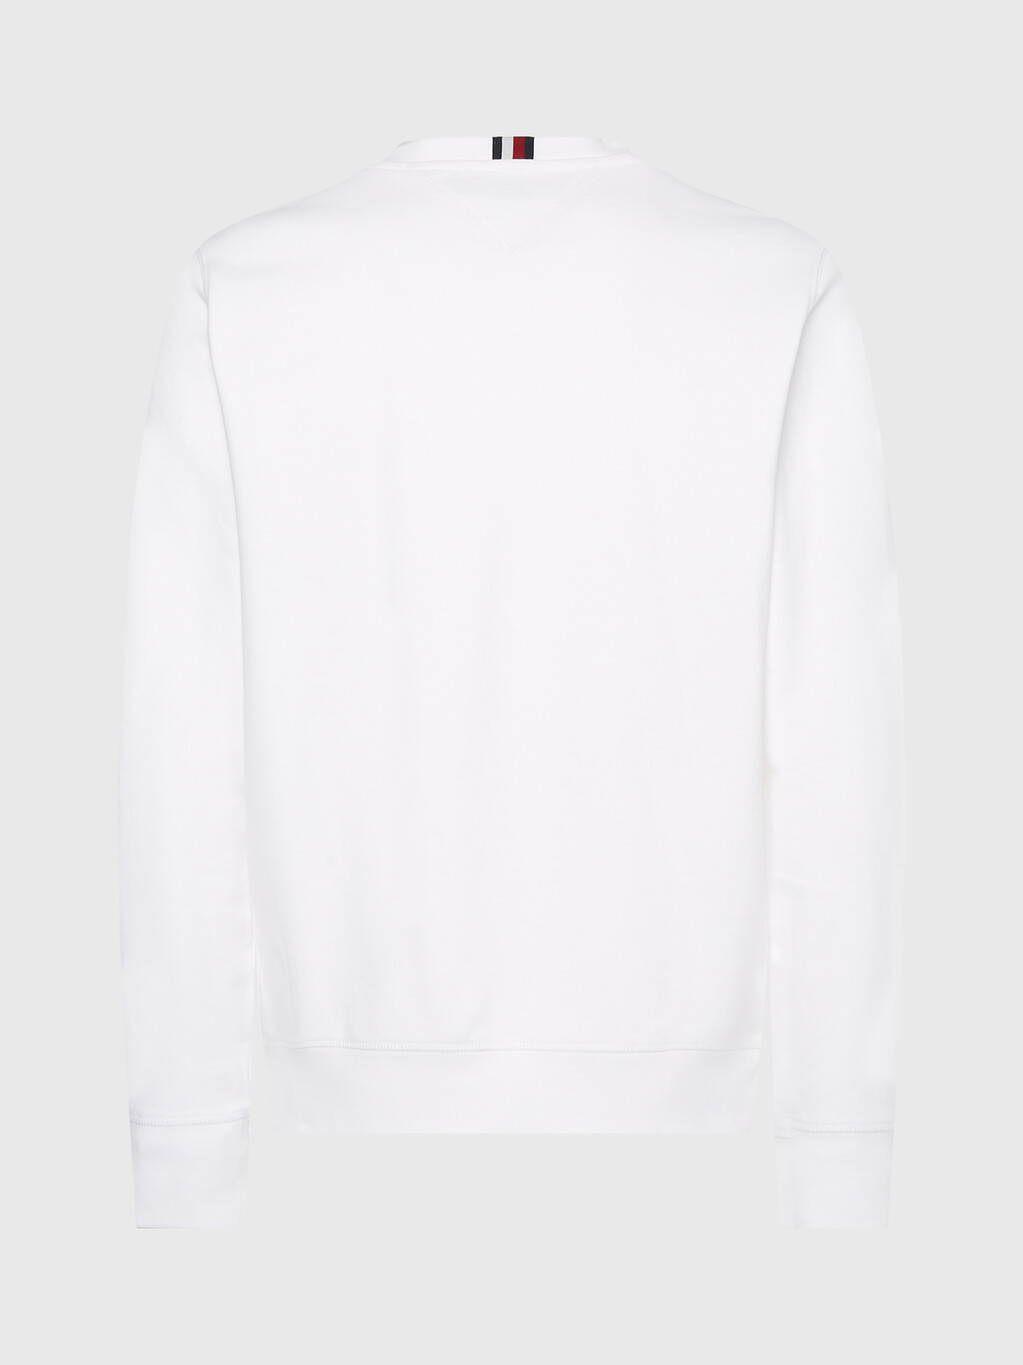 Icons Crest Sweatshirt, White, hi-res